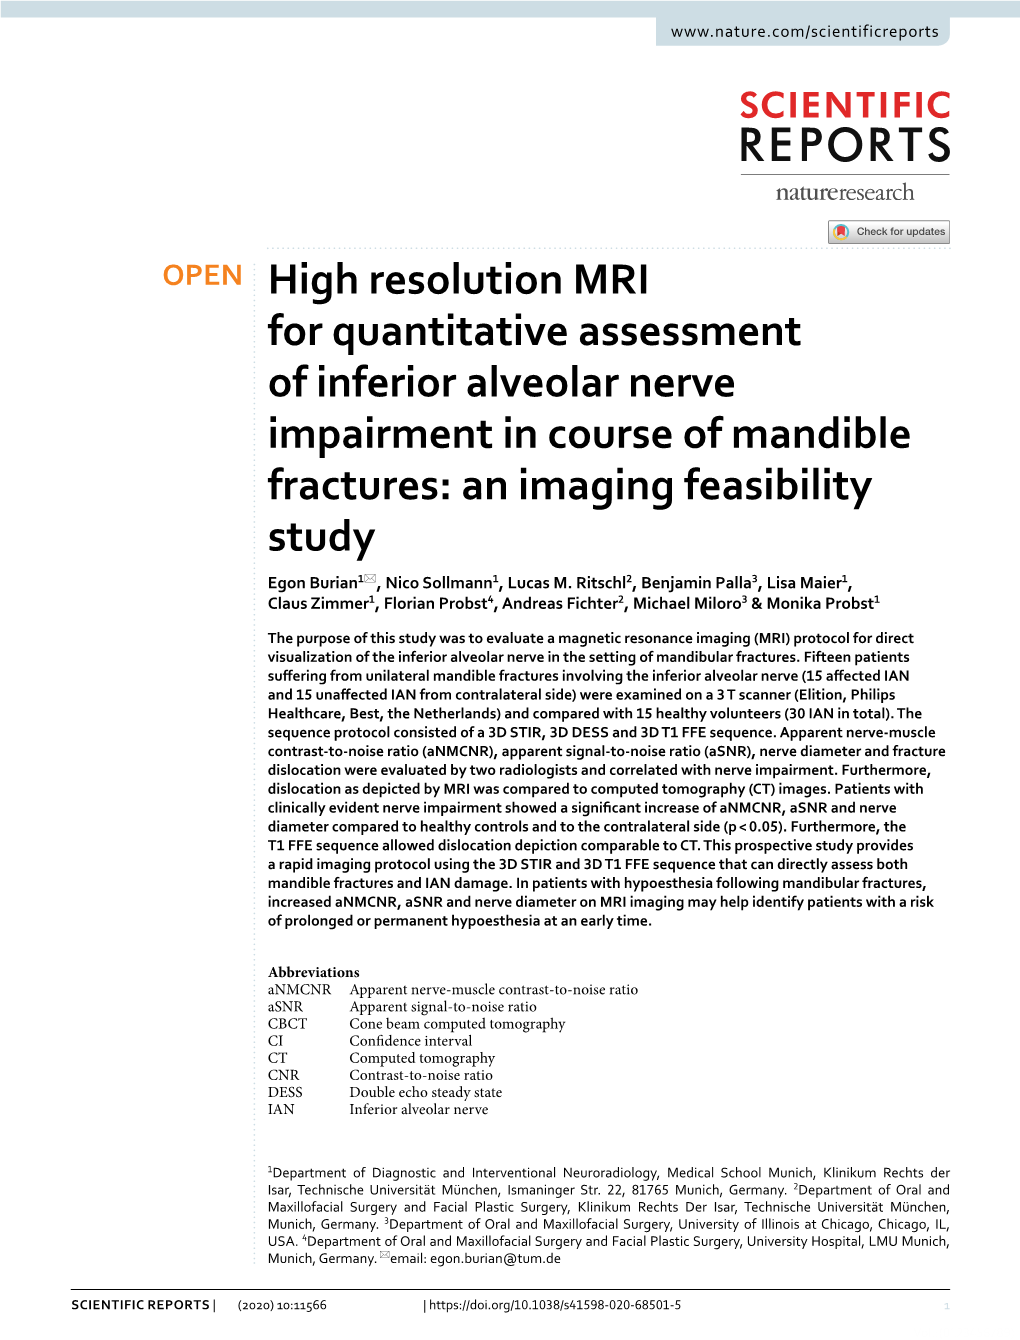 High Resolution MRI for Quantitative Assessment of Inferior Alveolar Nerve Impairment in Course of Mandible Fractures